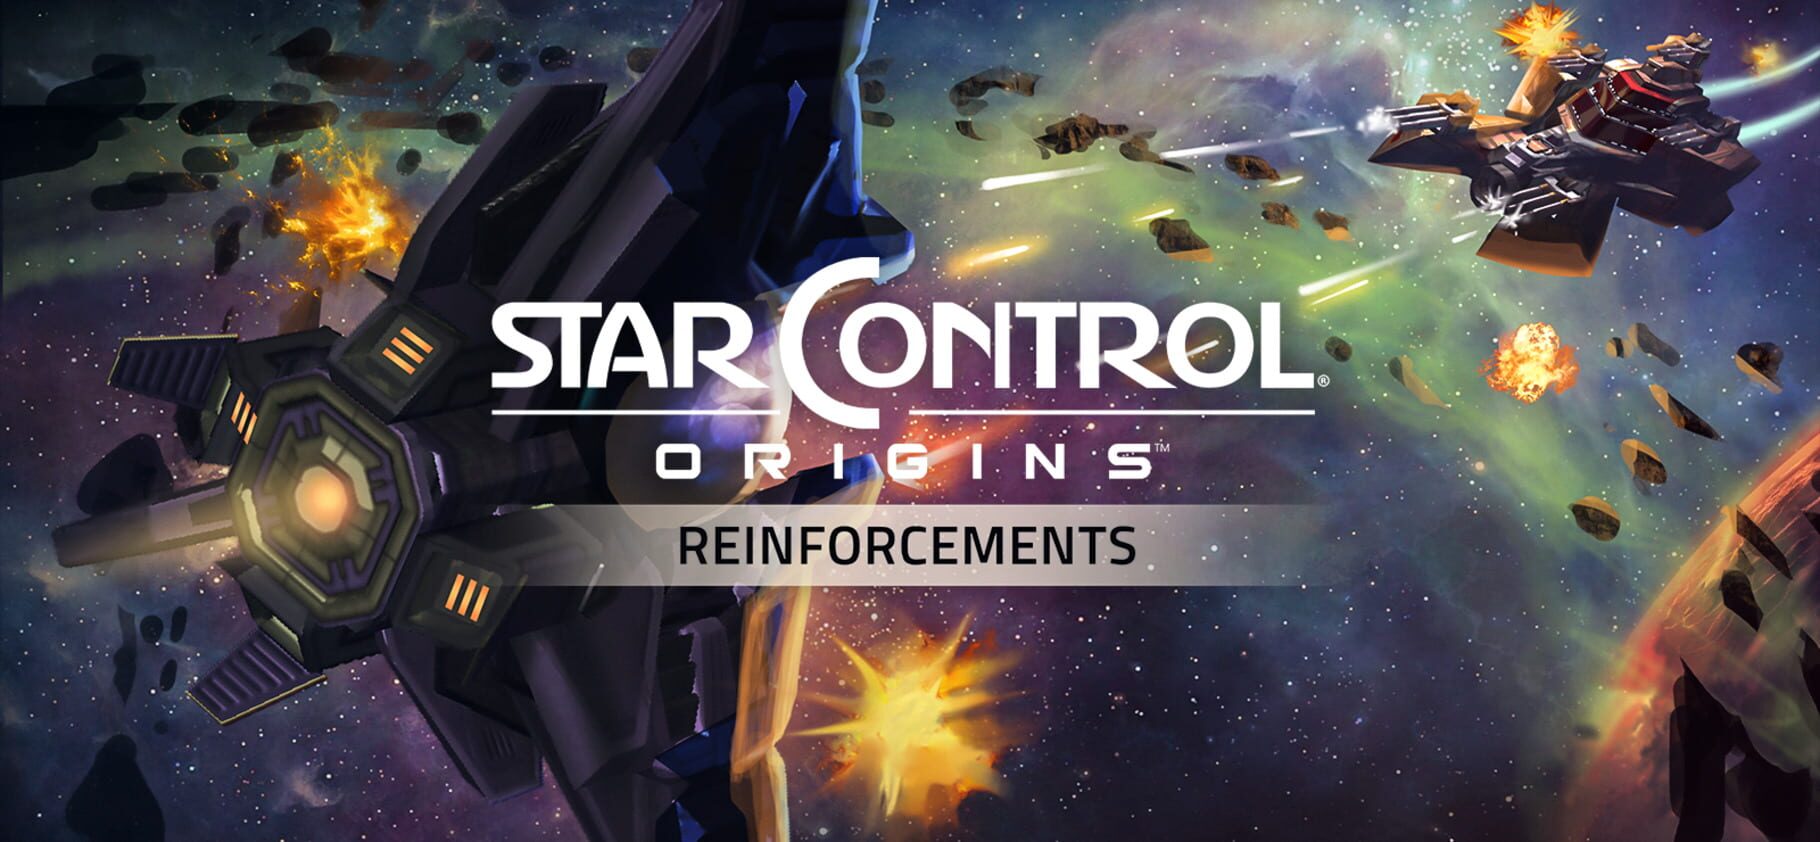 Star Control: Origins - Reinforcements Image